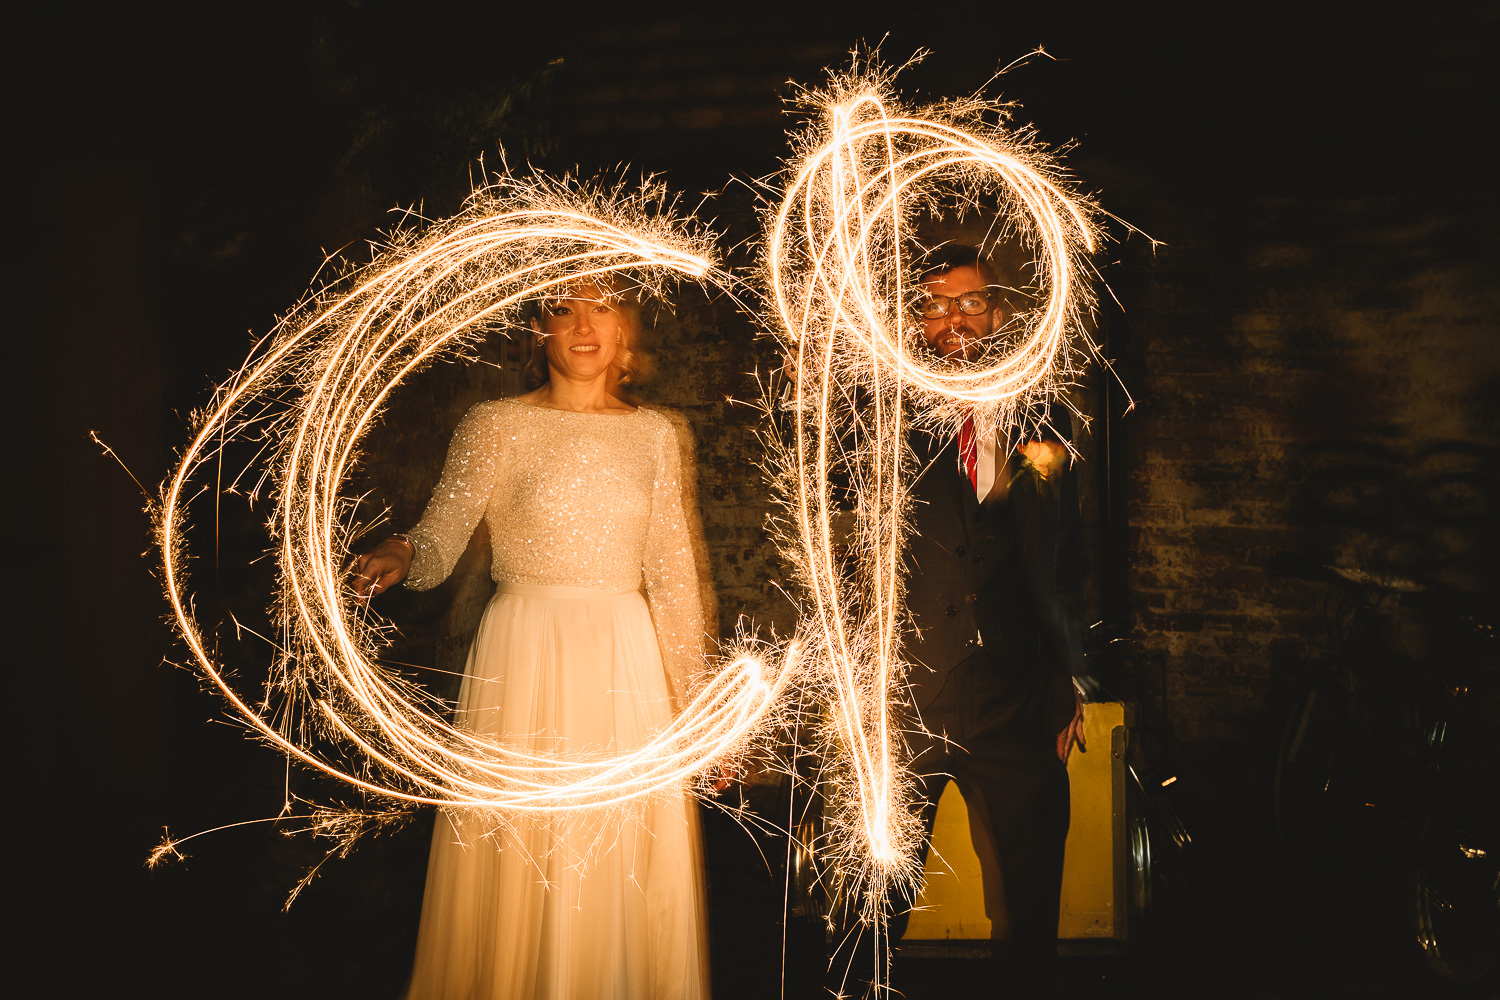 Long exposure couple alternative wedding portrait with sparklers